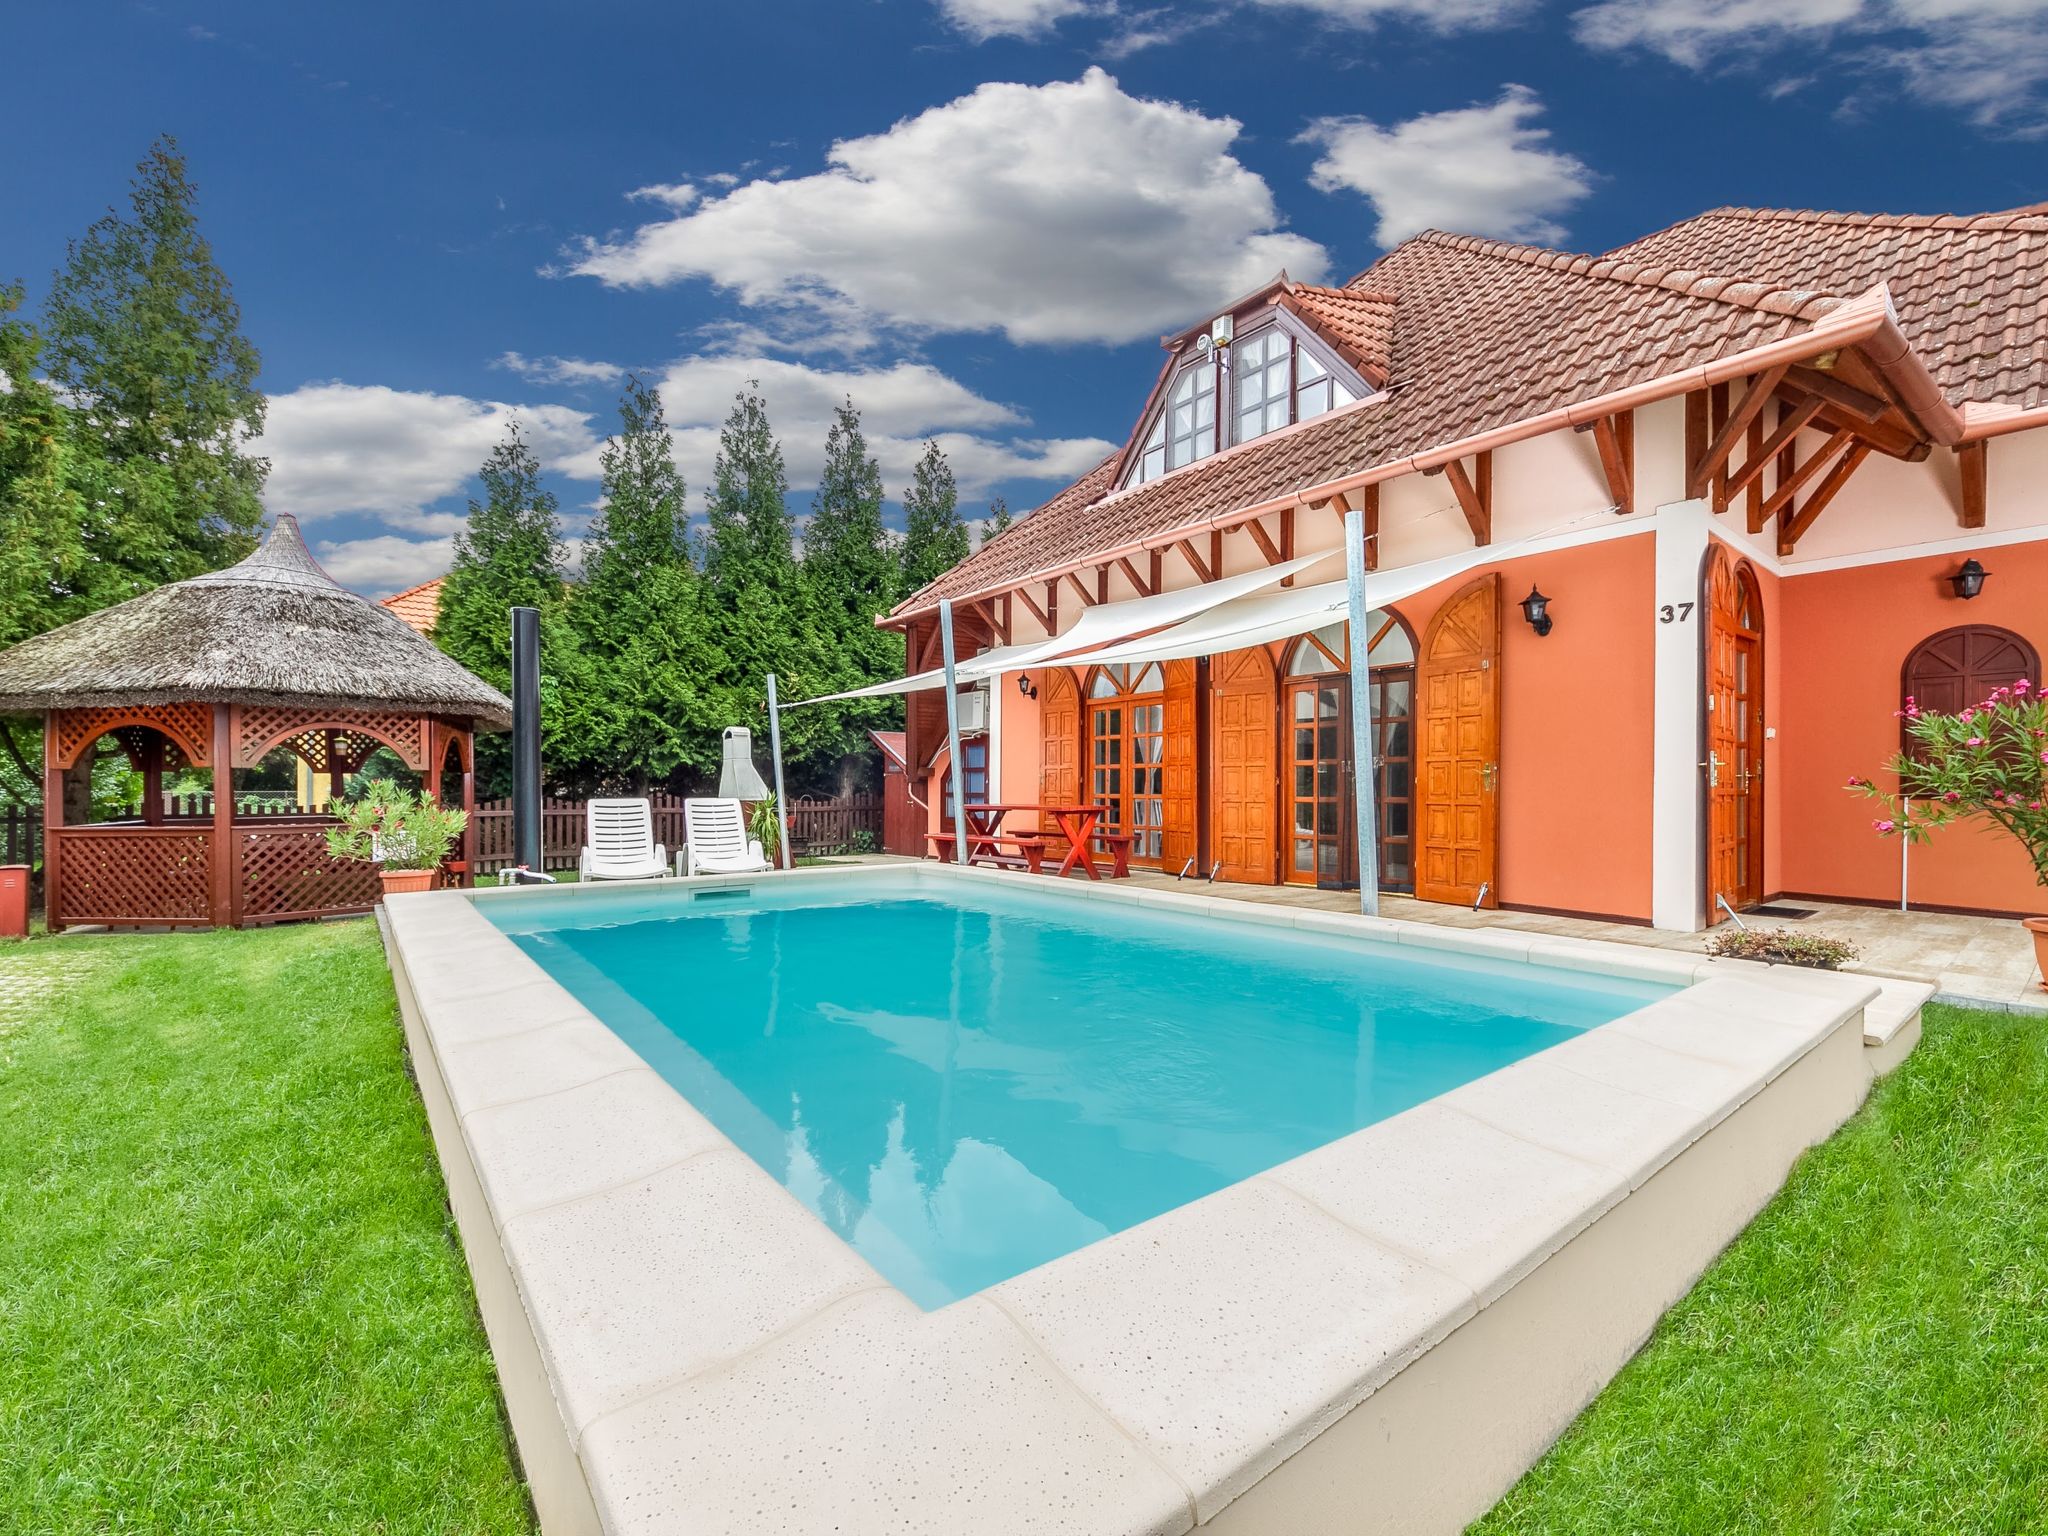 Foto 1 - Casa con 4 camere da letto a Balatonberény con piscina privata e giardino